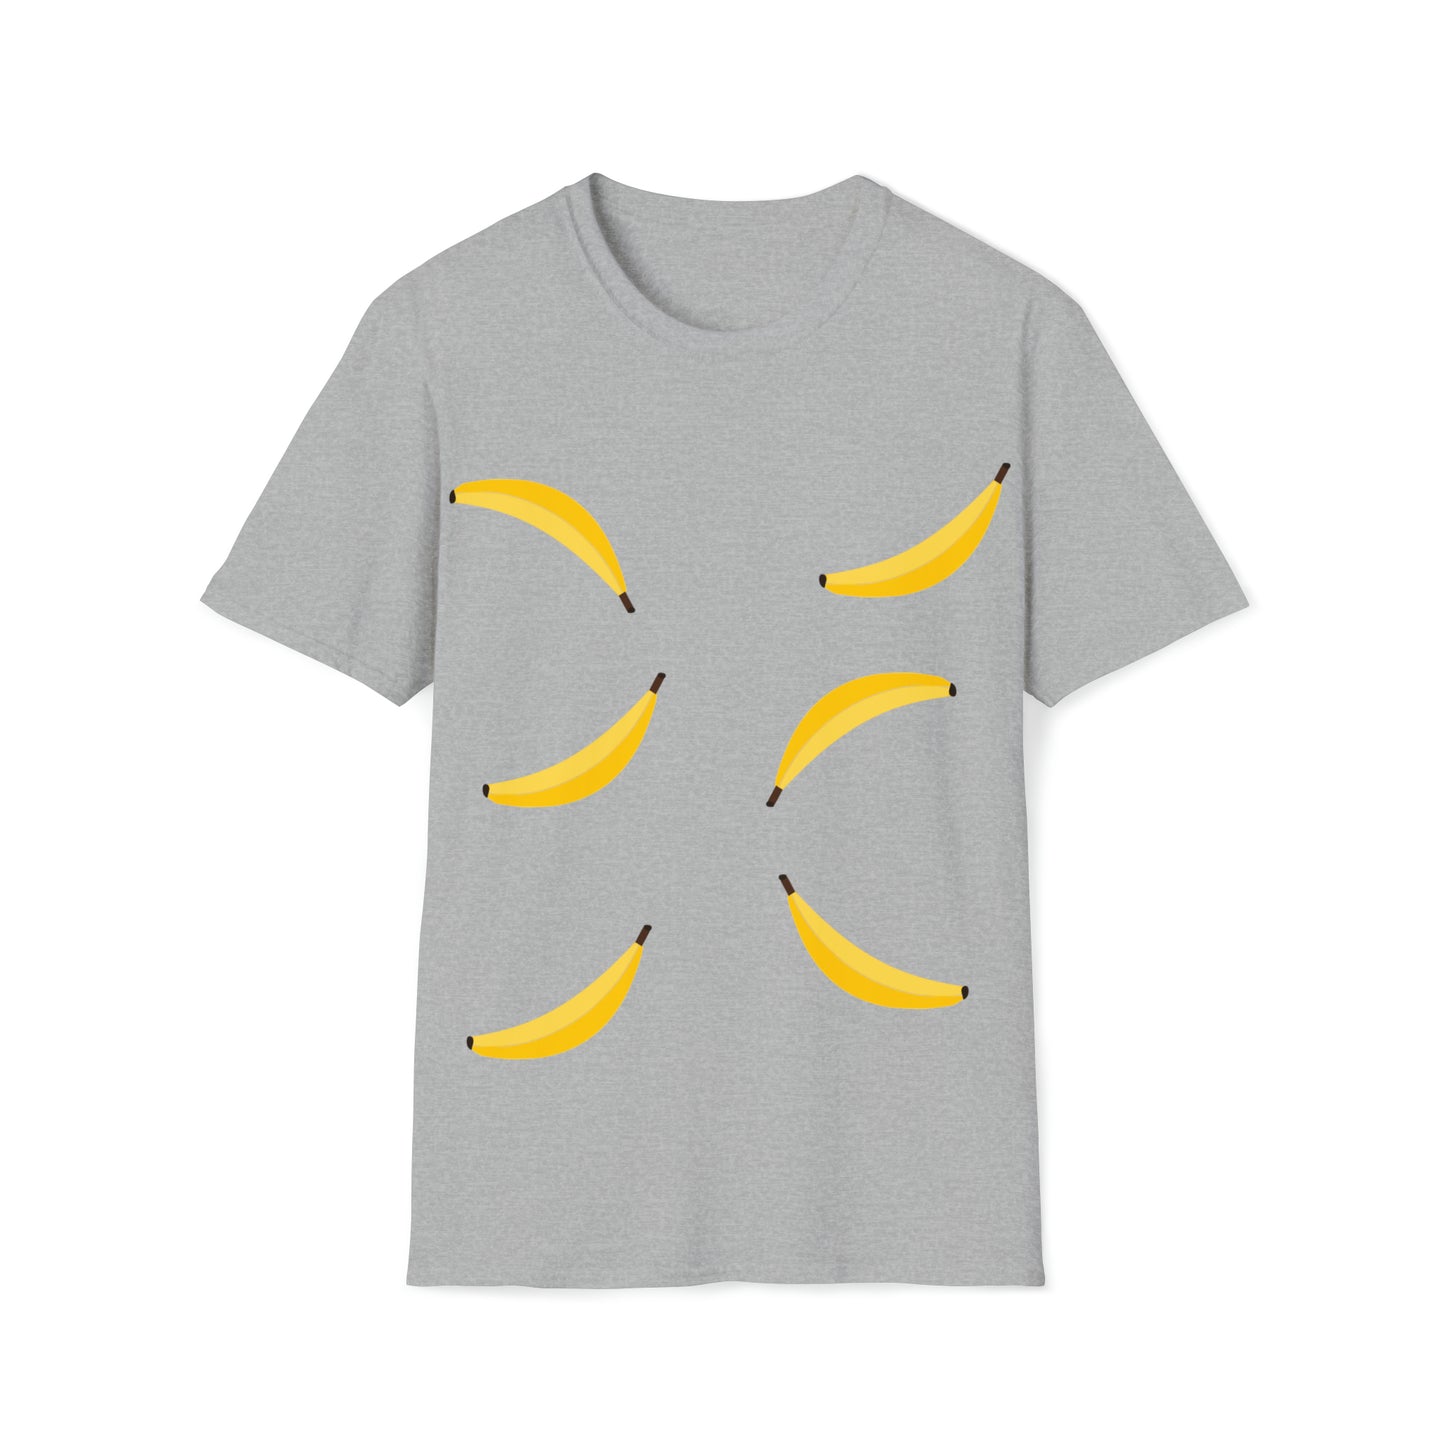 Going Bananas tshirt